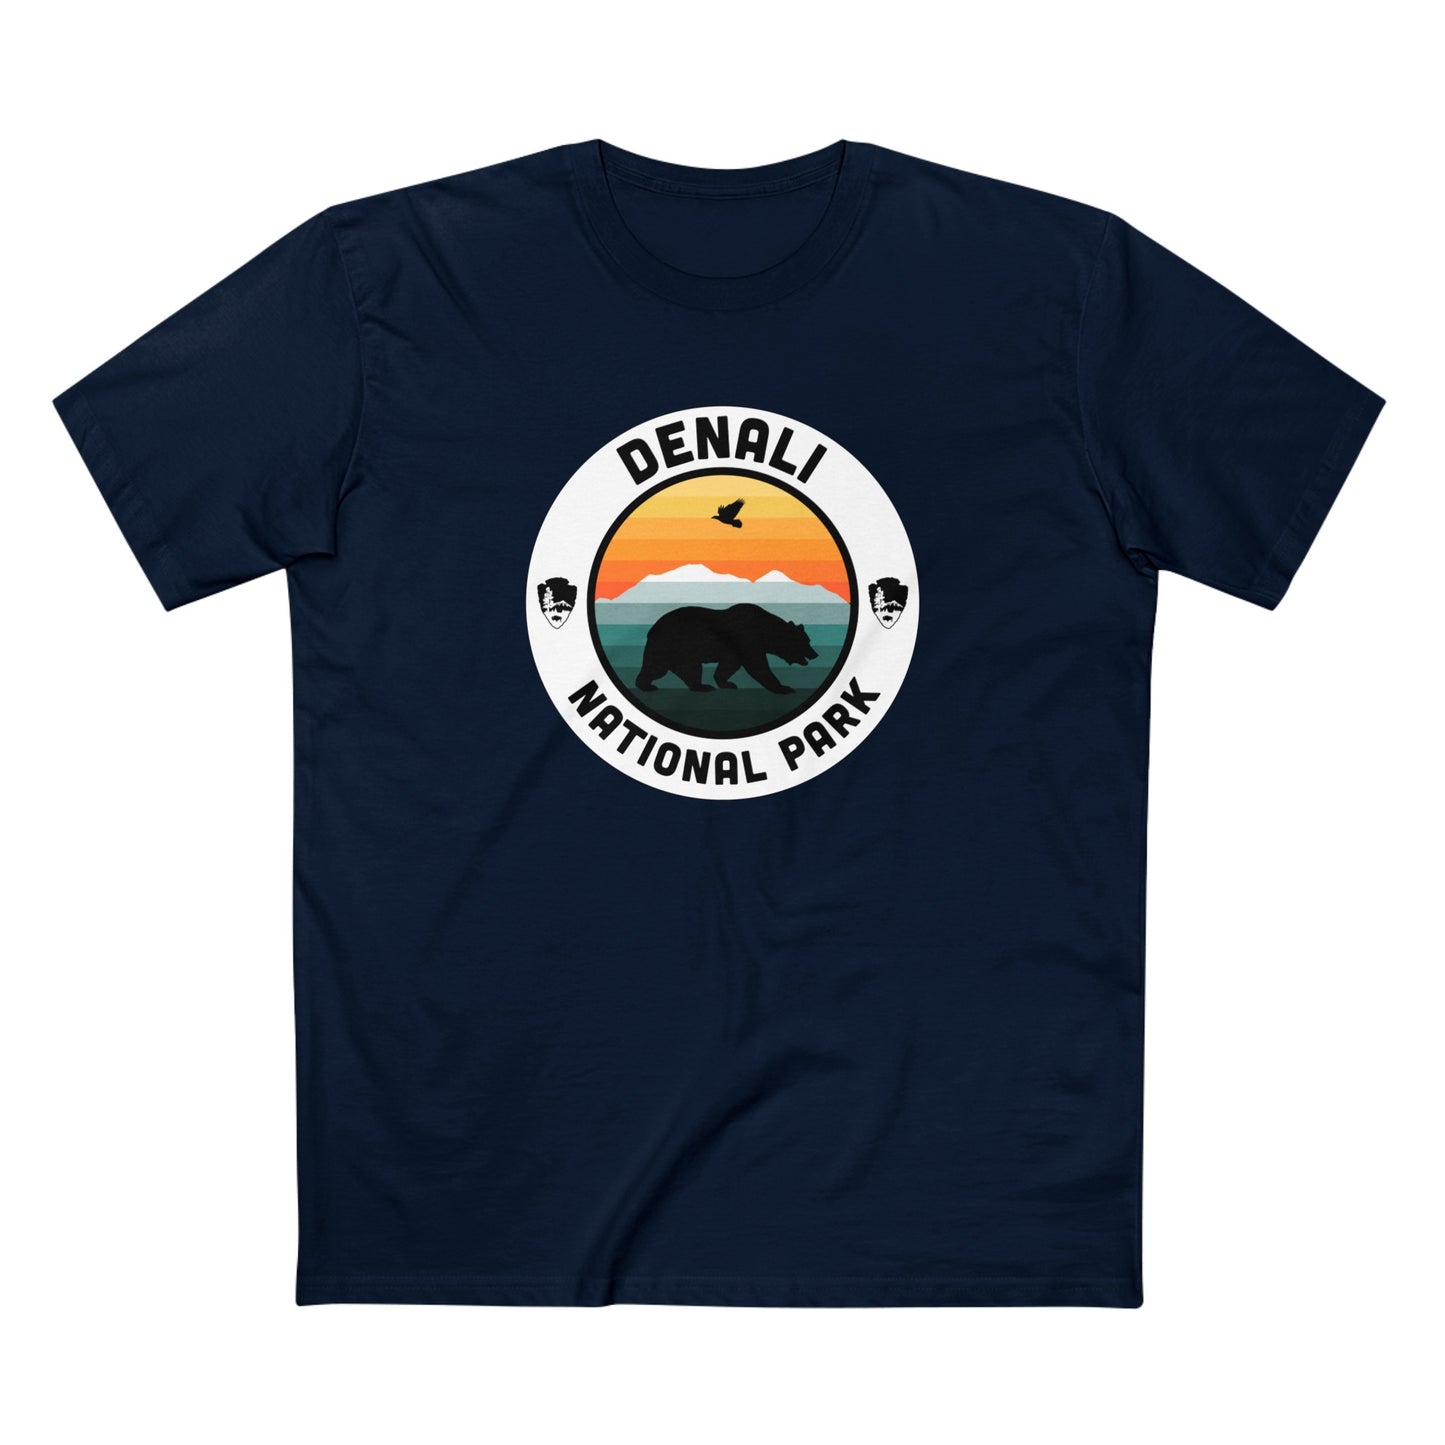 Denali National Park T-Shirt - Round Badge Design